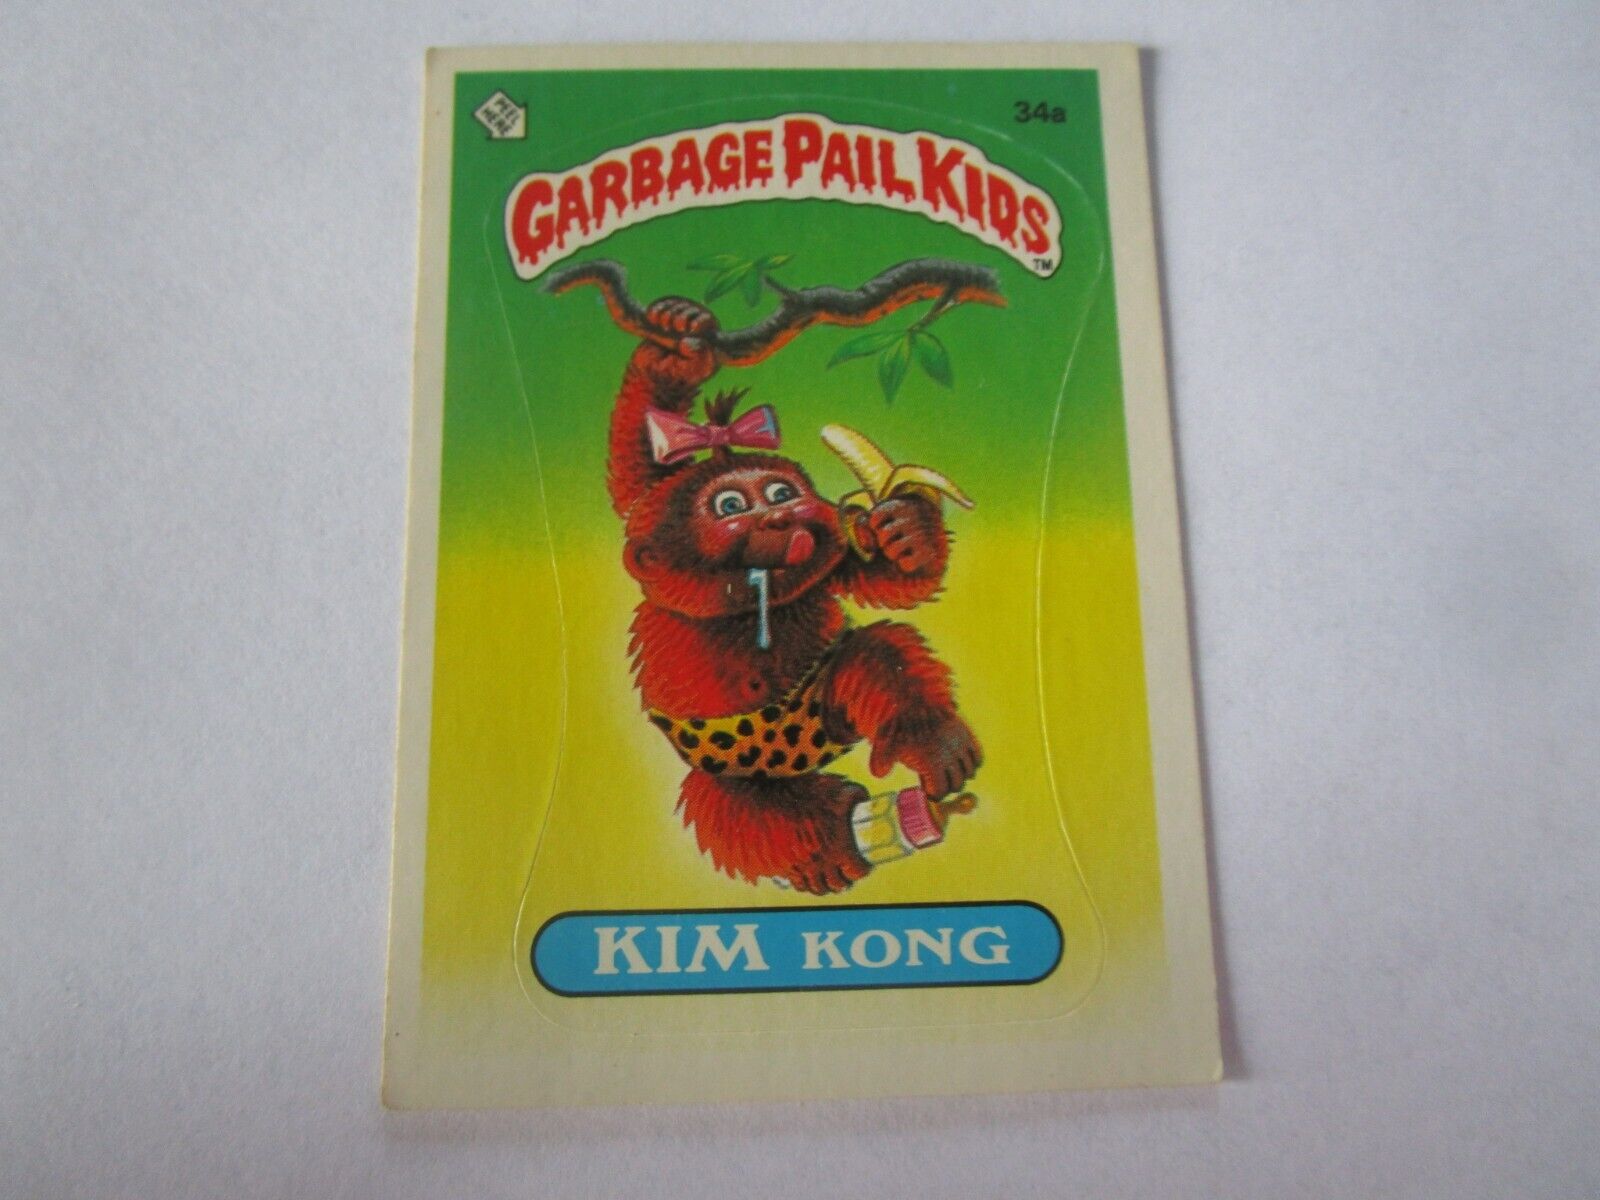 1985 Topps Garbage Pail Kids Card First Series 1 OS1 GPK 34a Kim Kong